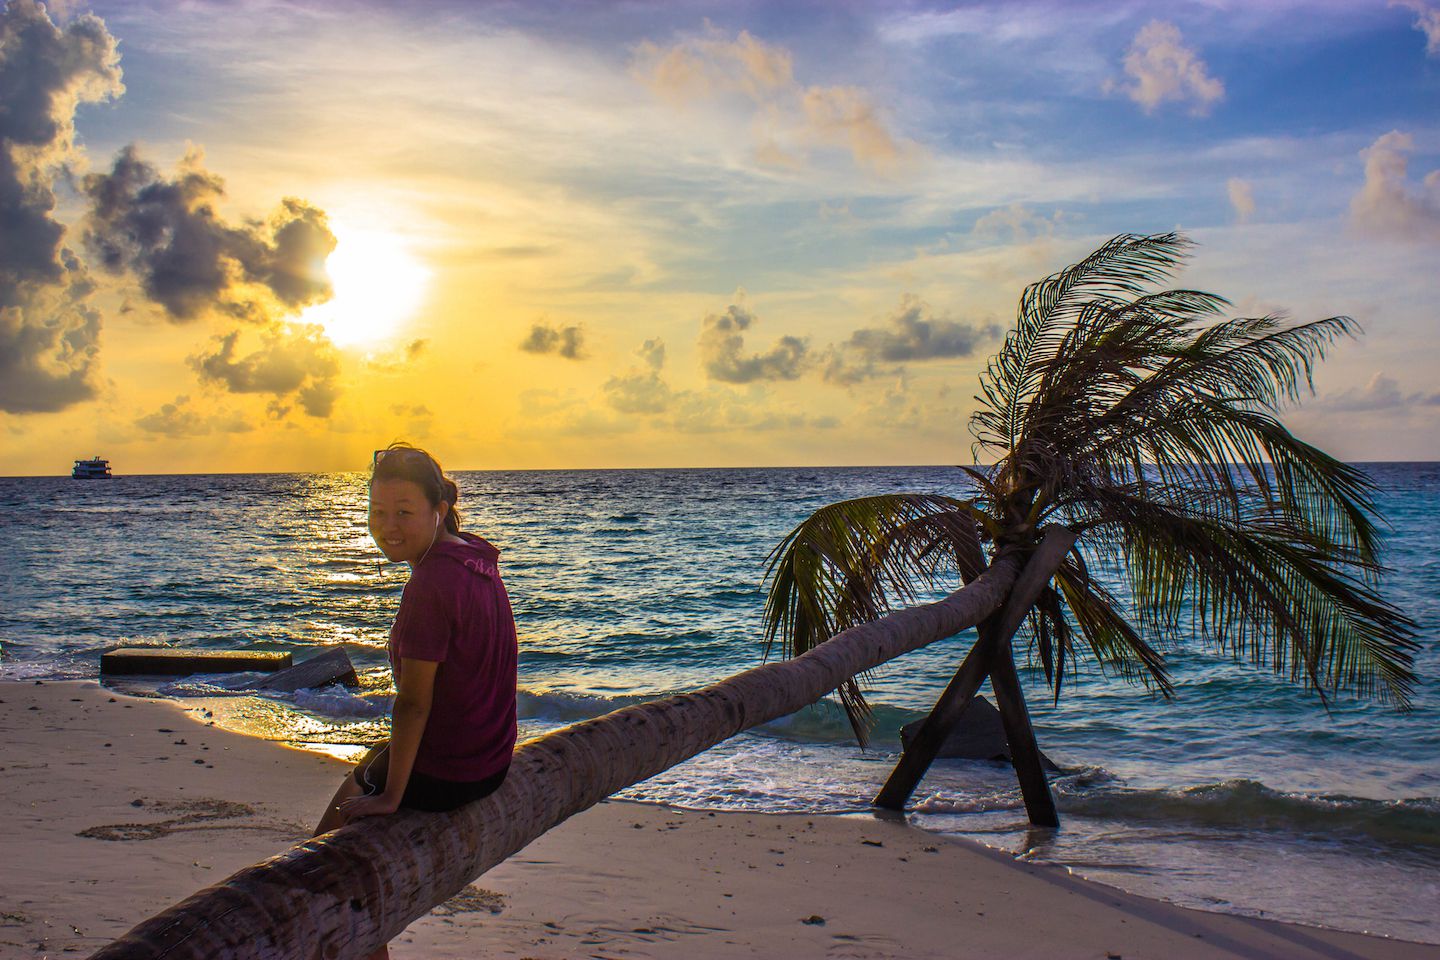 Julie enjoying the sunset in Maafushi, Maldives